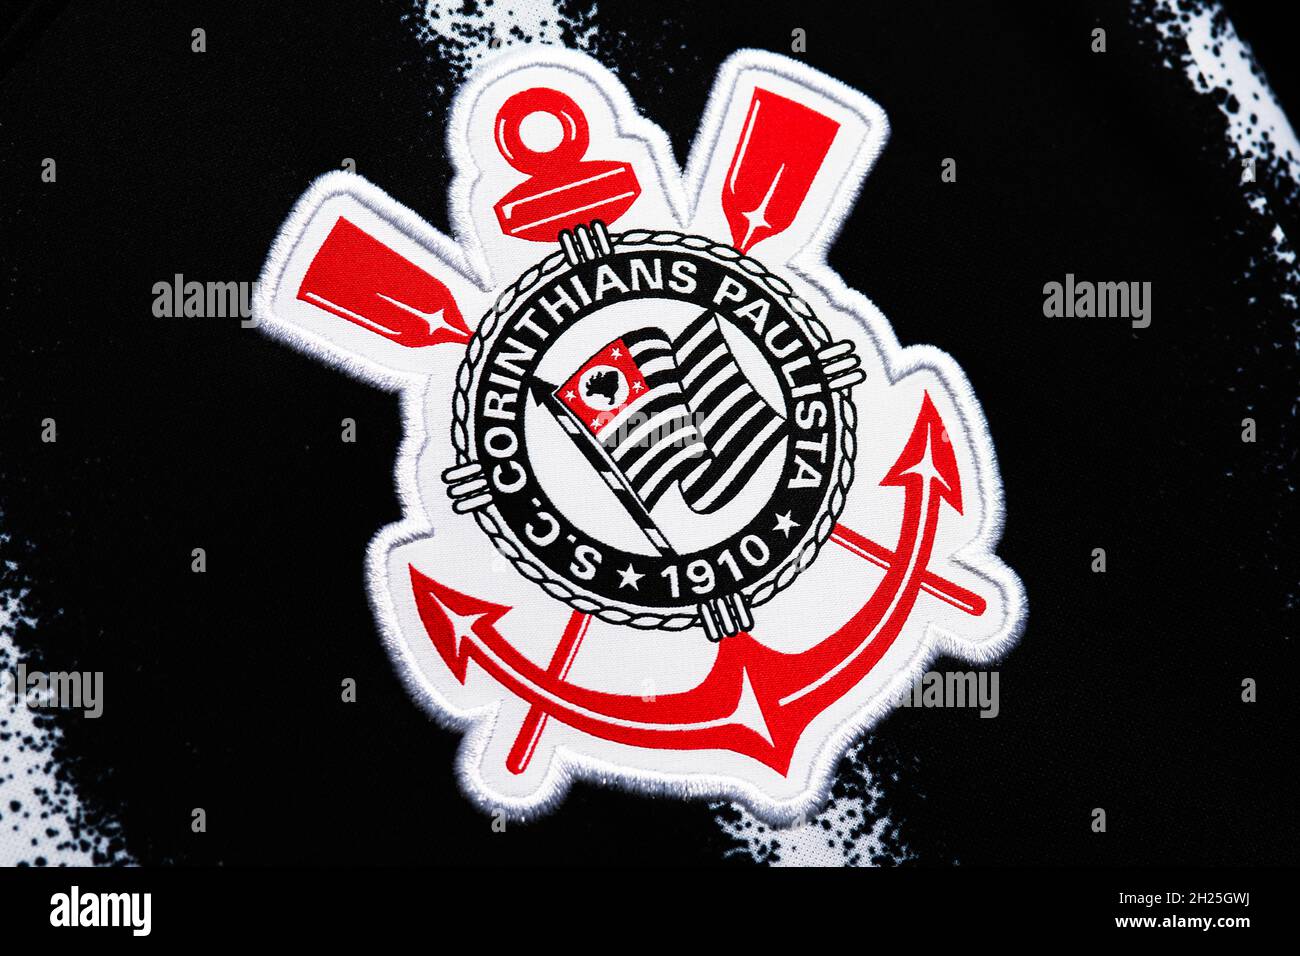 Nahaufnahme des Vereinswappens von Corinthians. Stockfoto